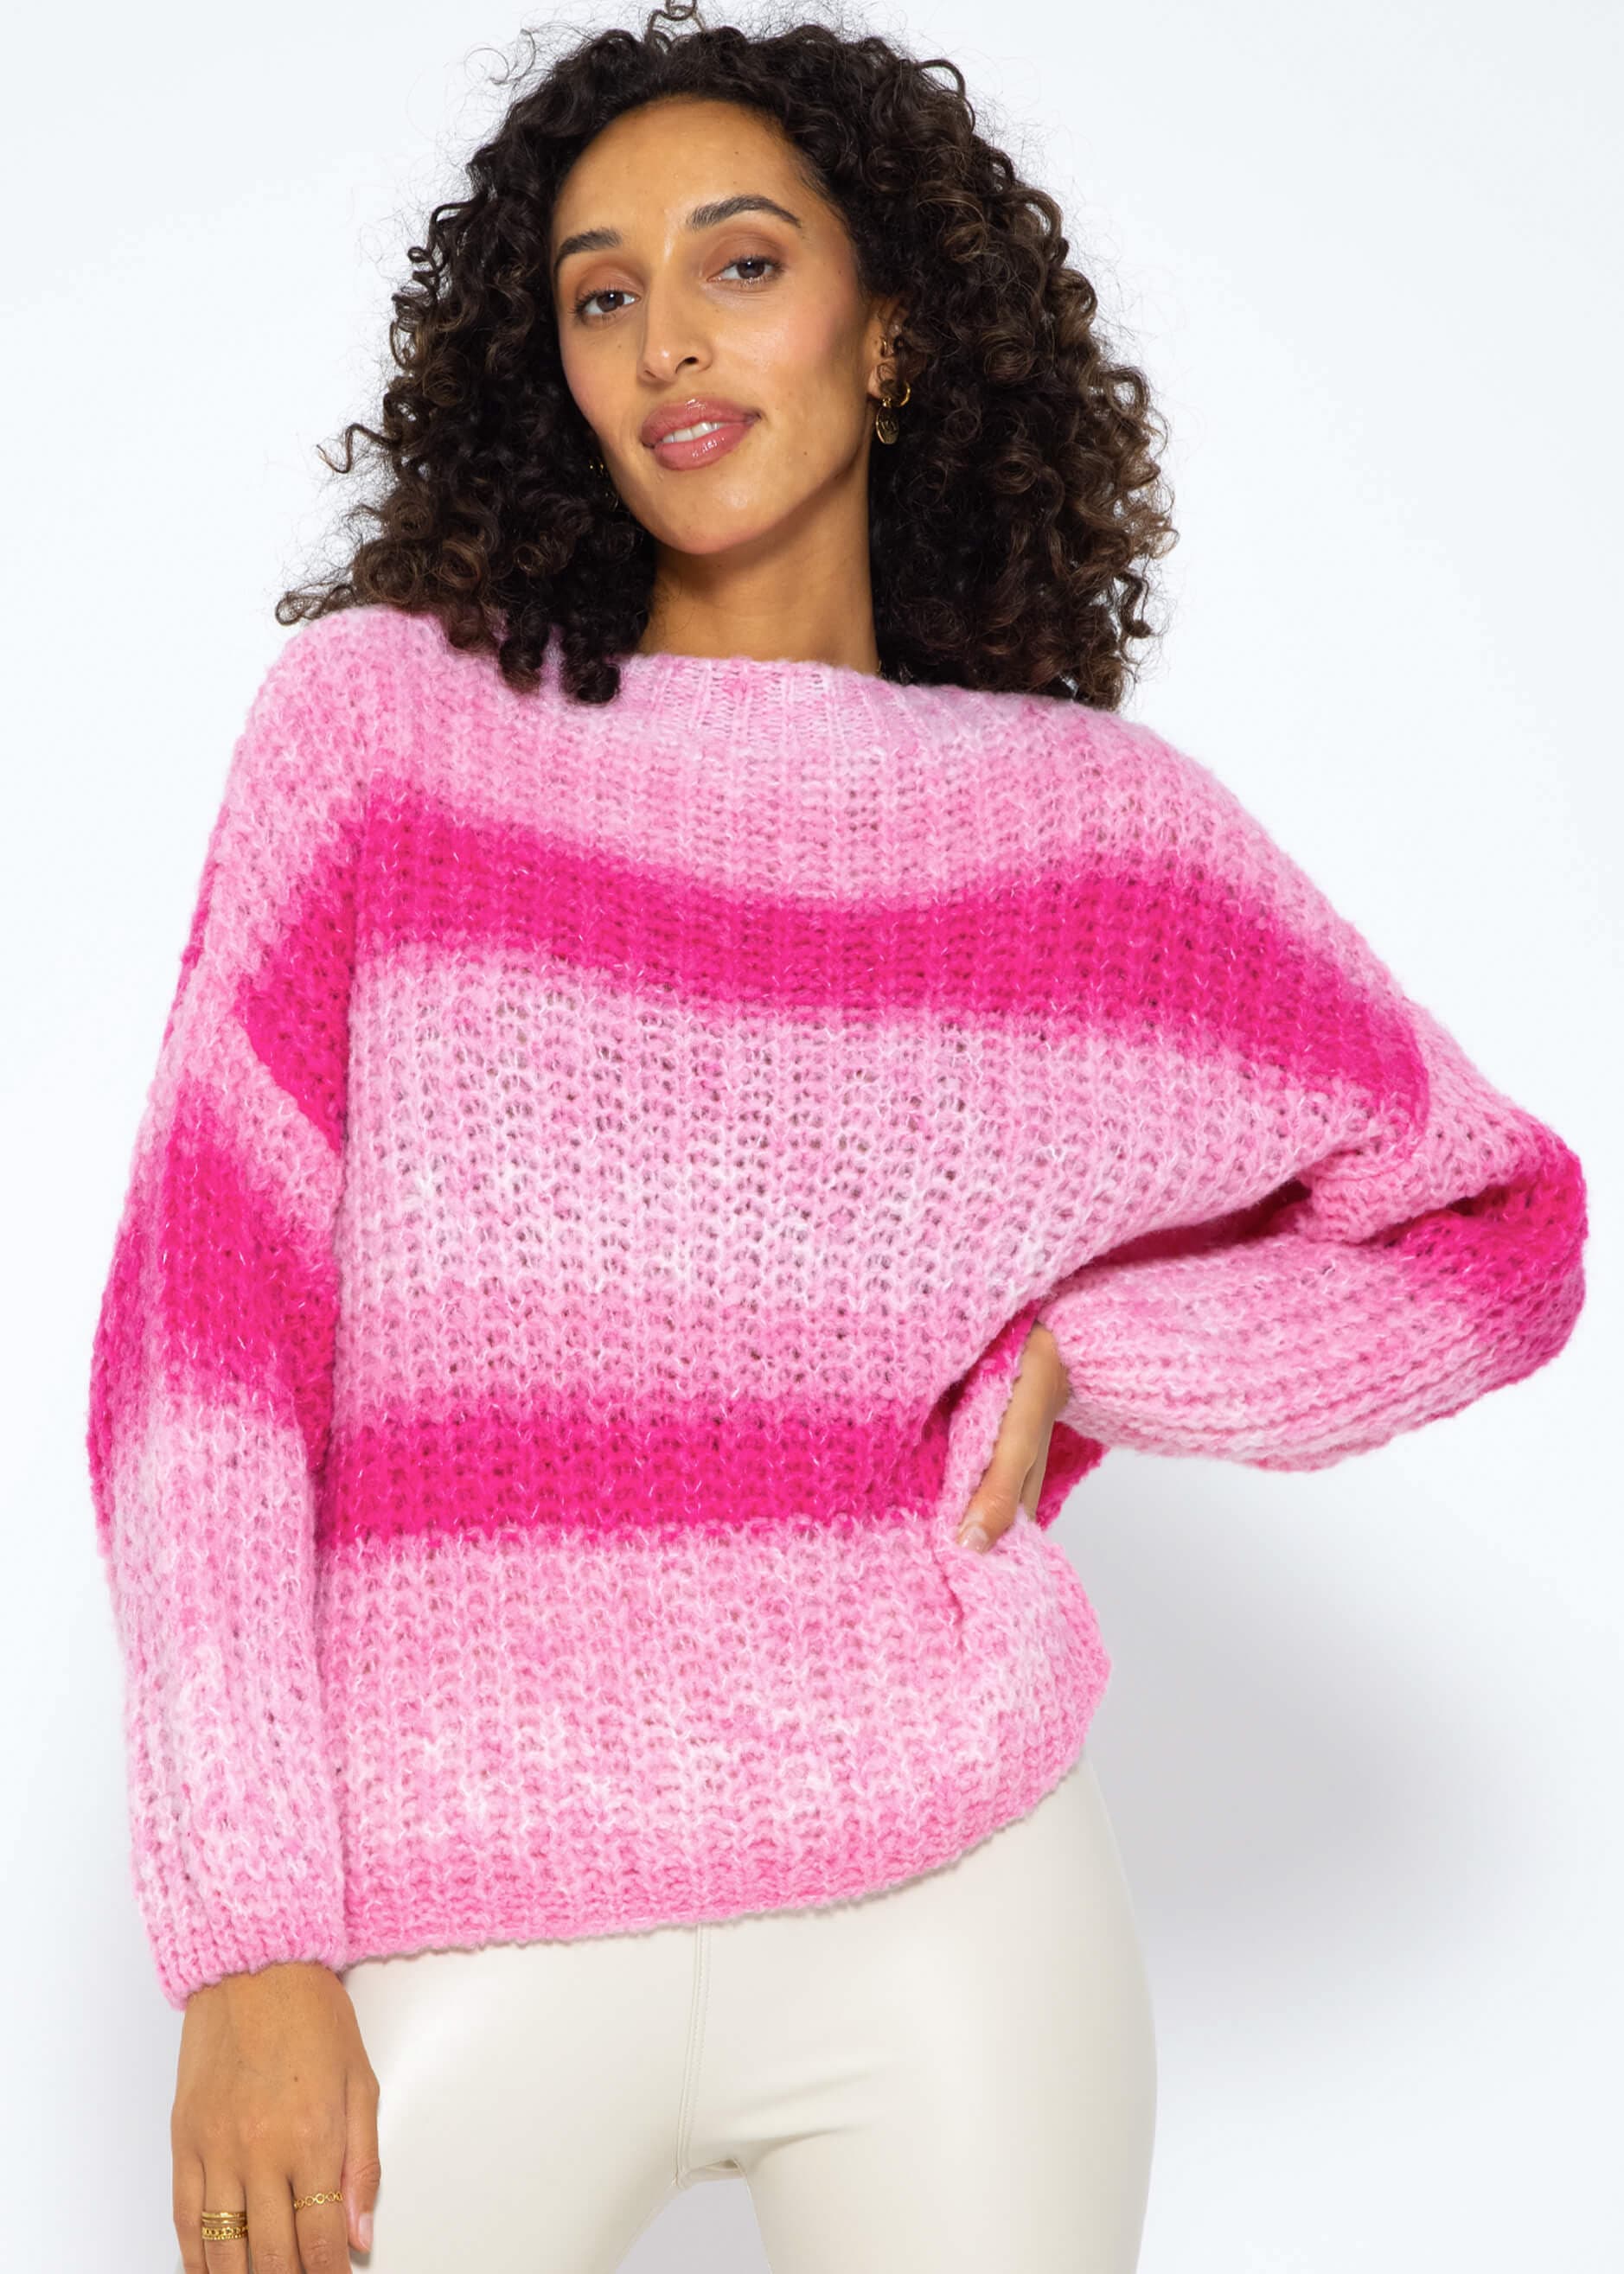 Strickpullover mit Farbverlauf - rosa | Pullover | Bekleidung | SASSYCLASSY